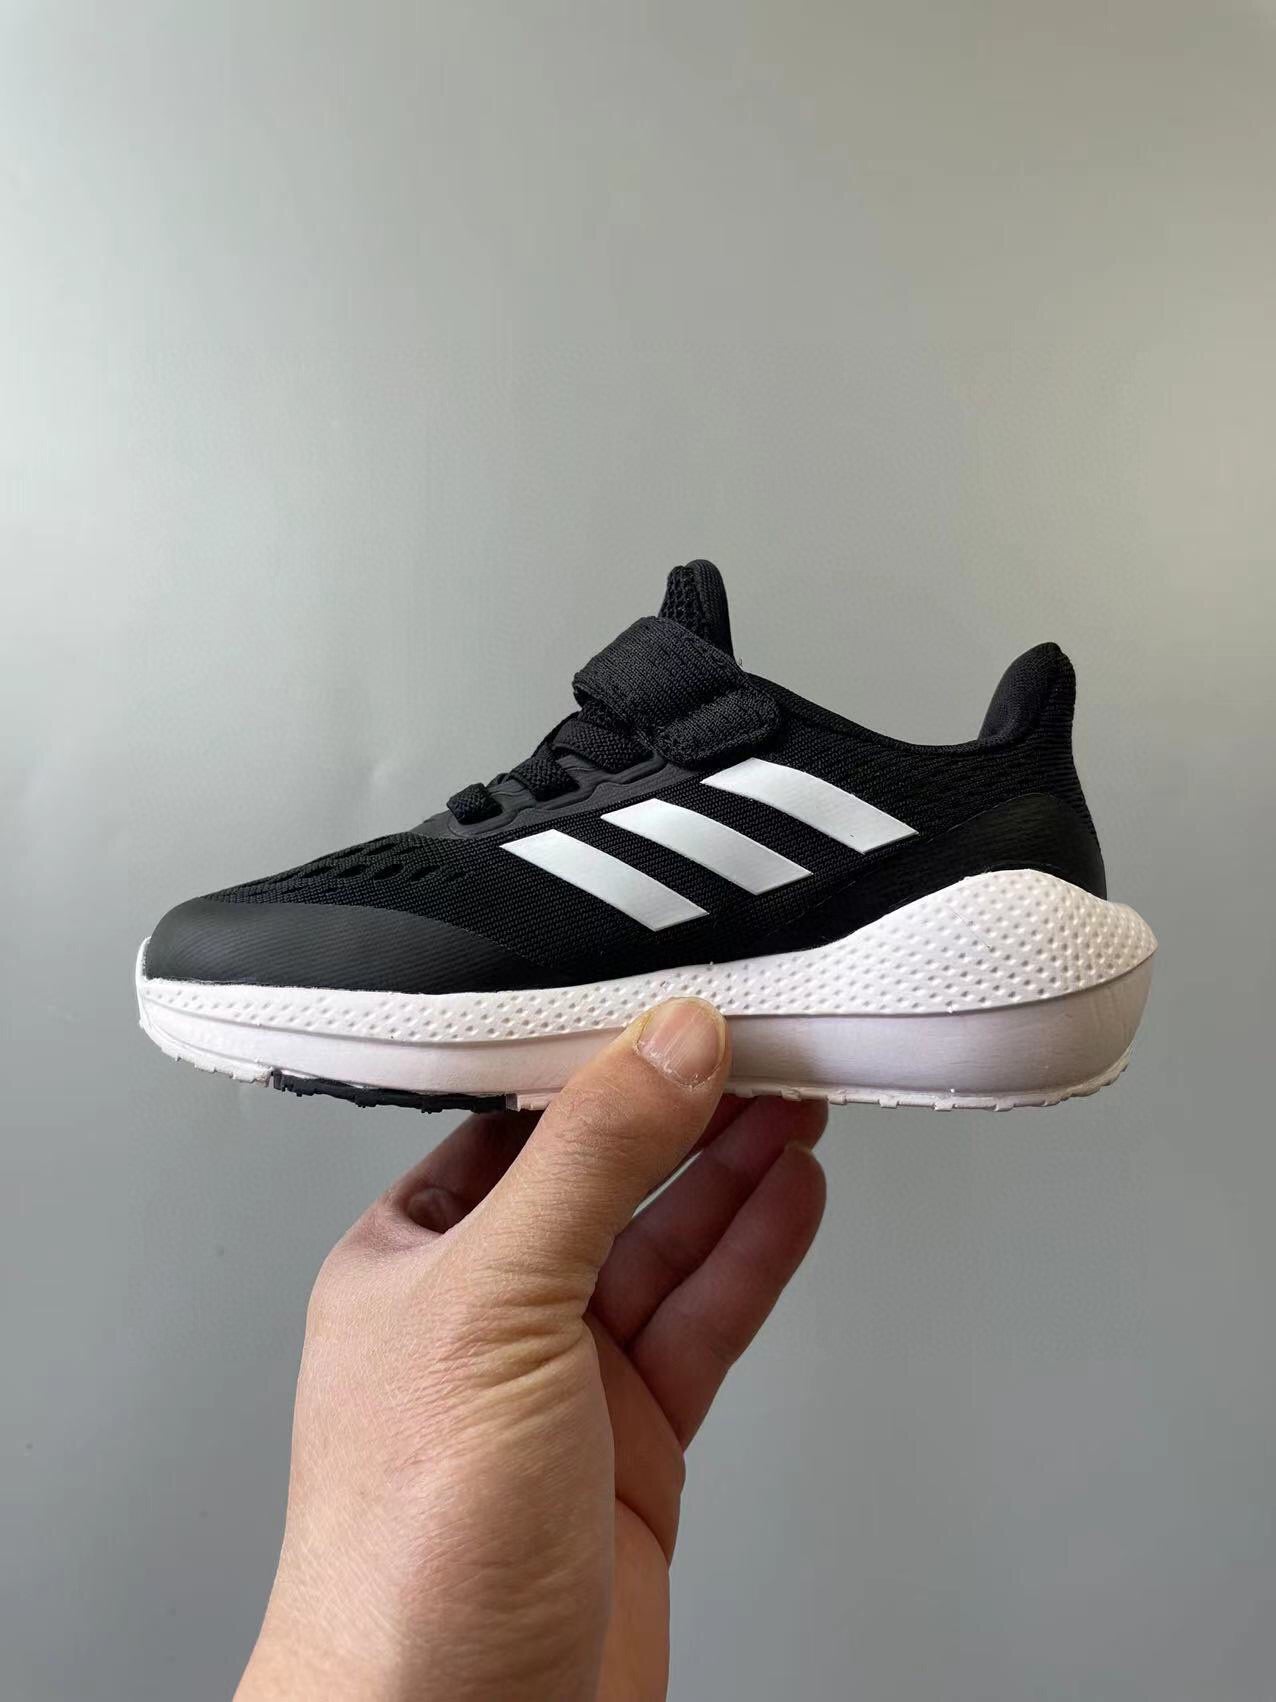 Adidas ultraboost black